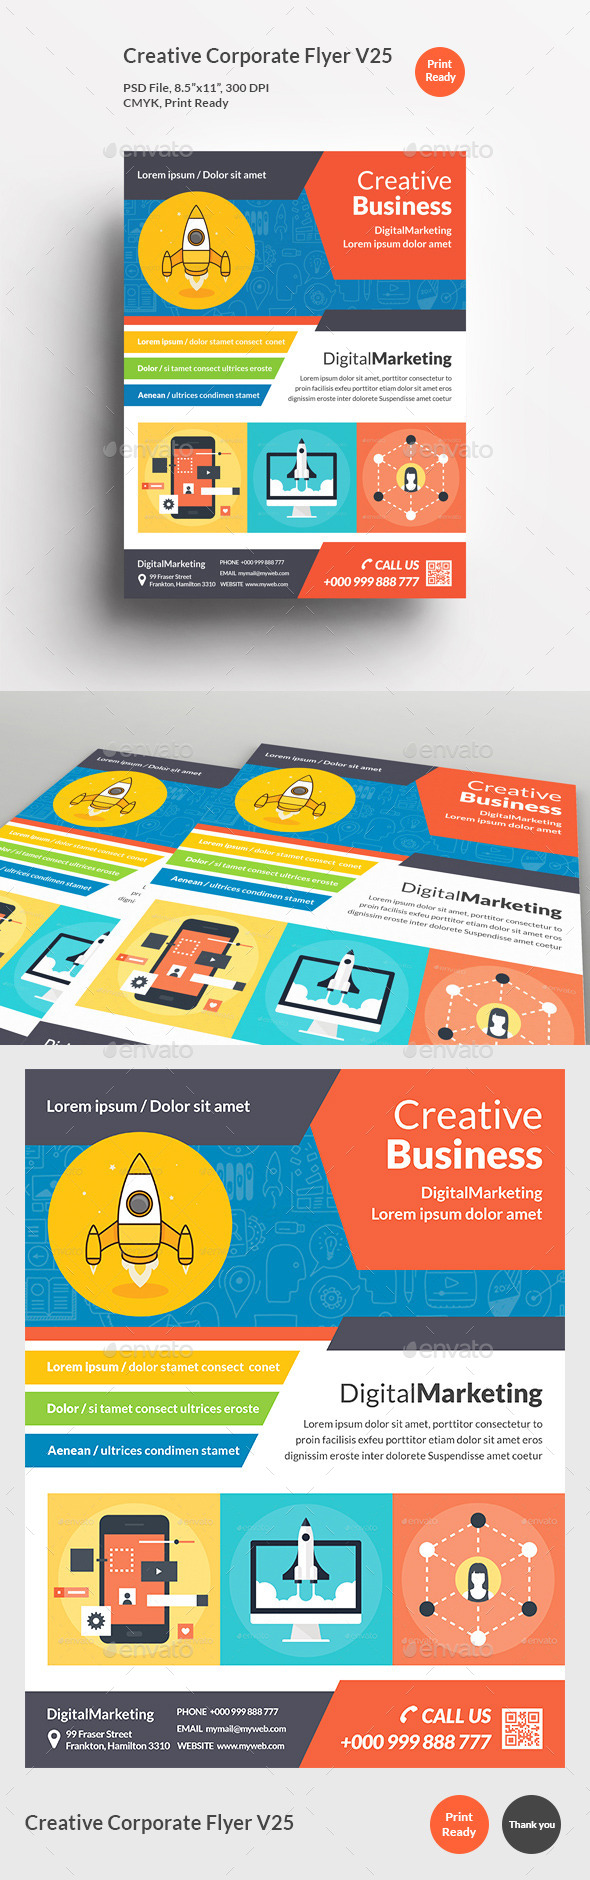 Creative Corporate Flyer V25